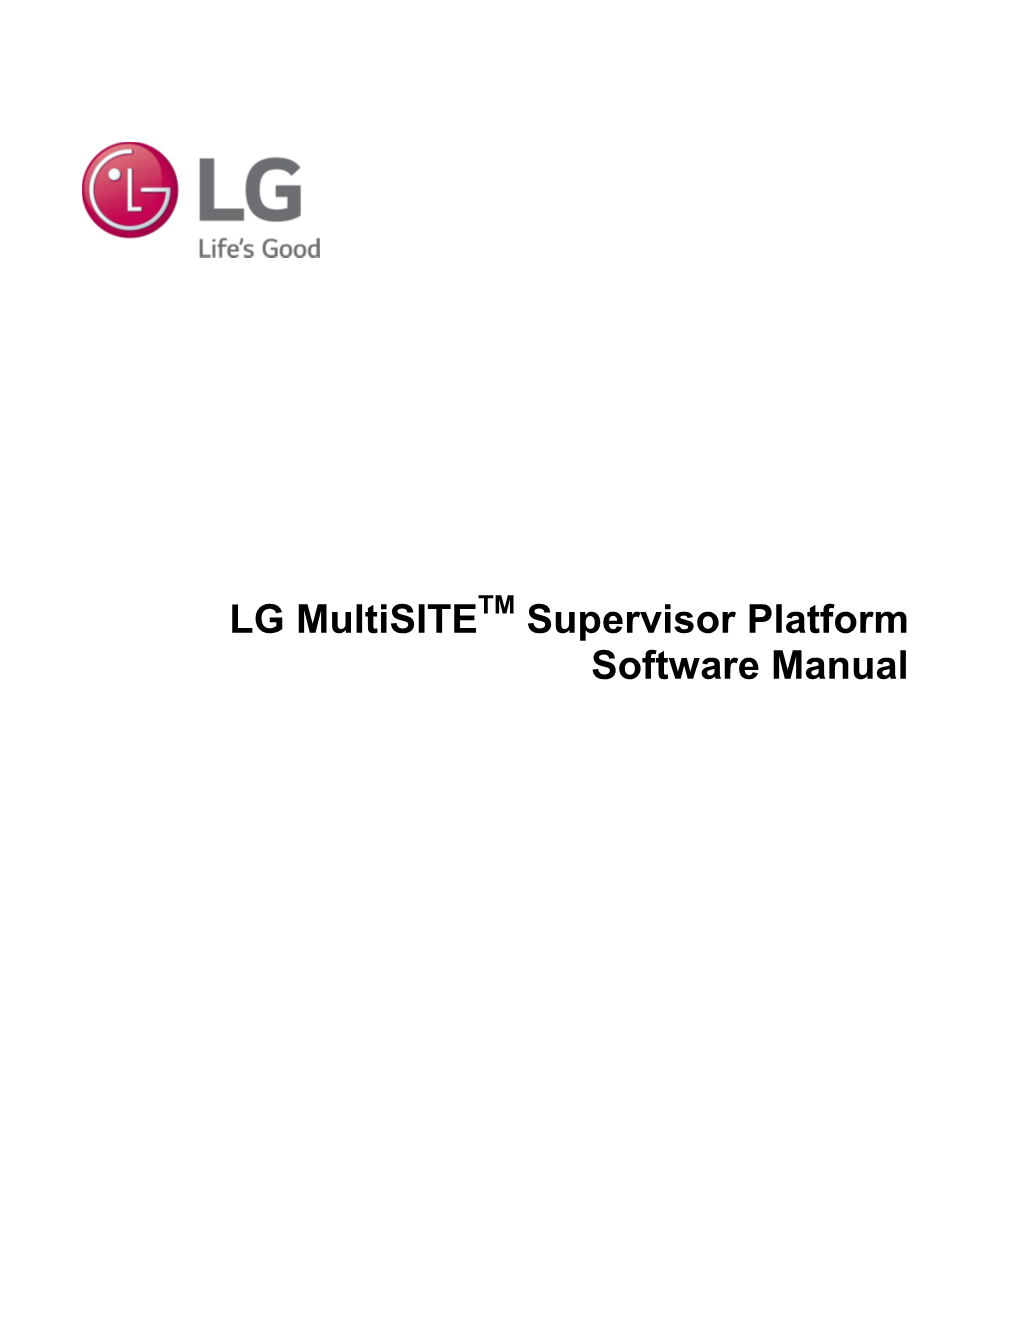 Multisite Supervisor Platform Guide